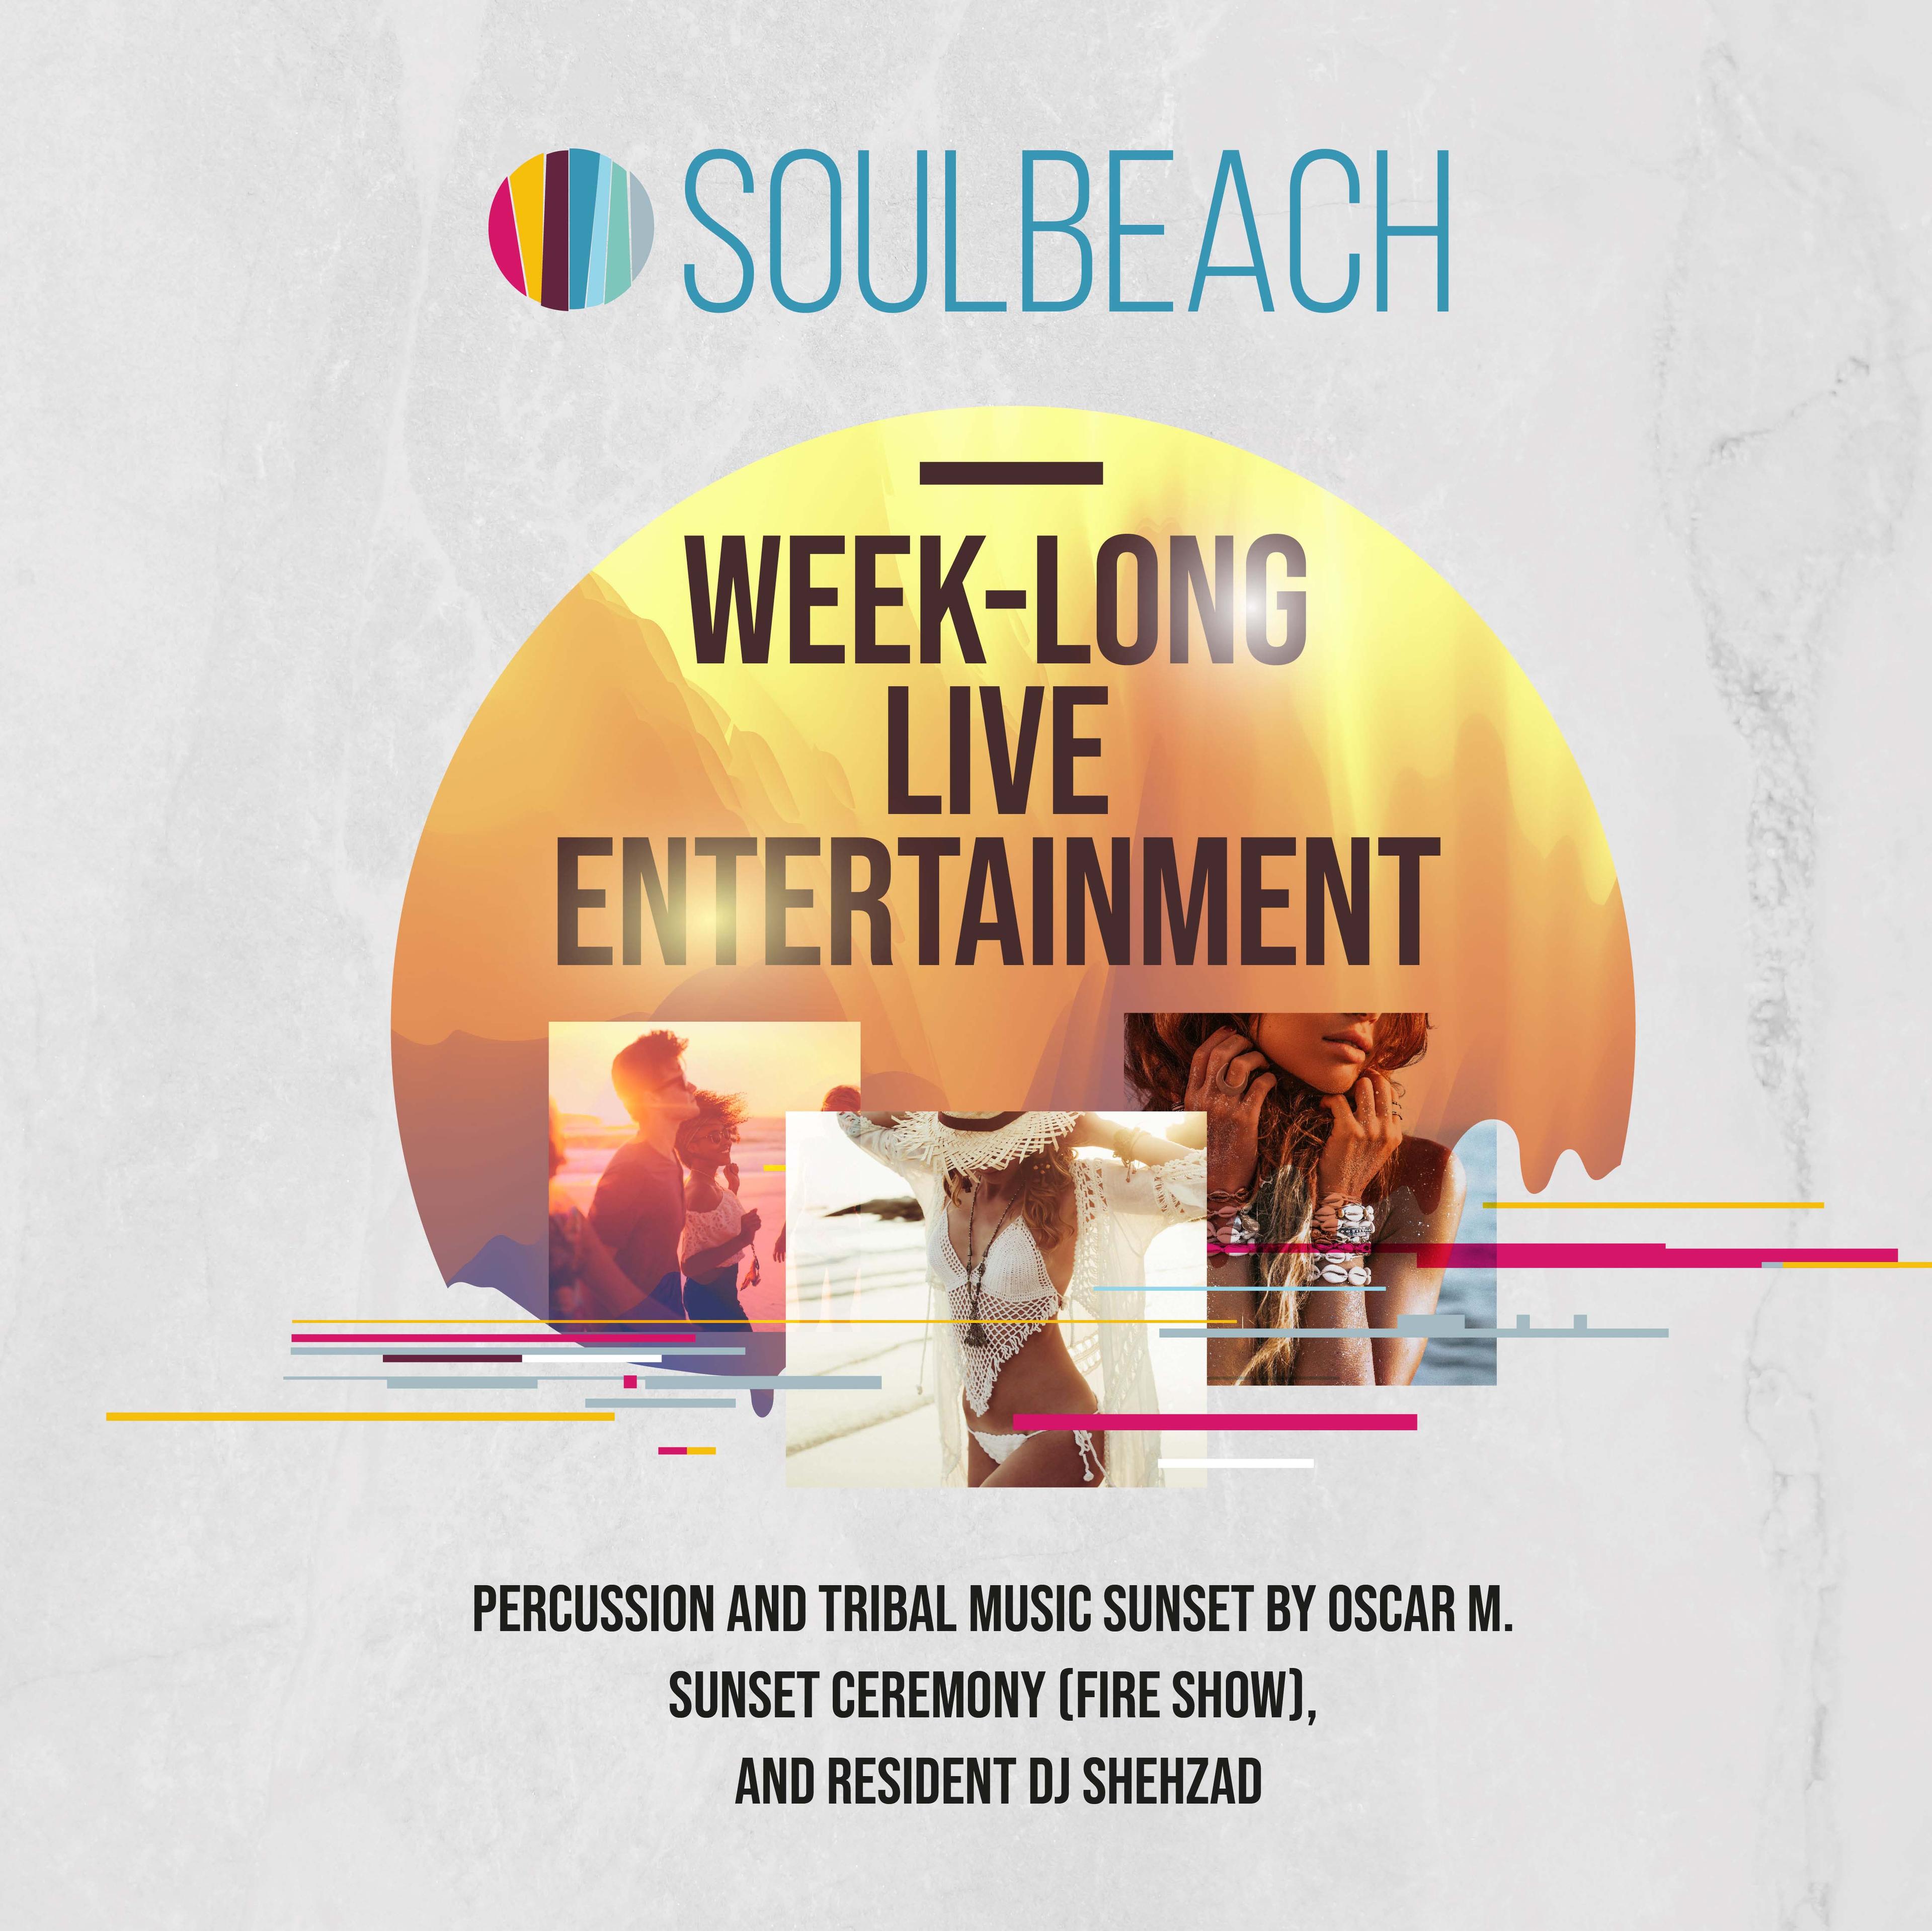 Soul beach week-long entertainment 